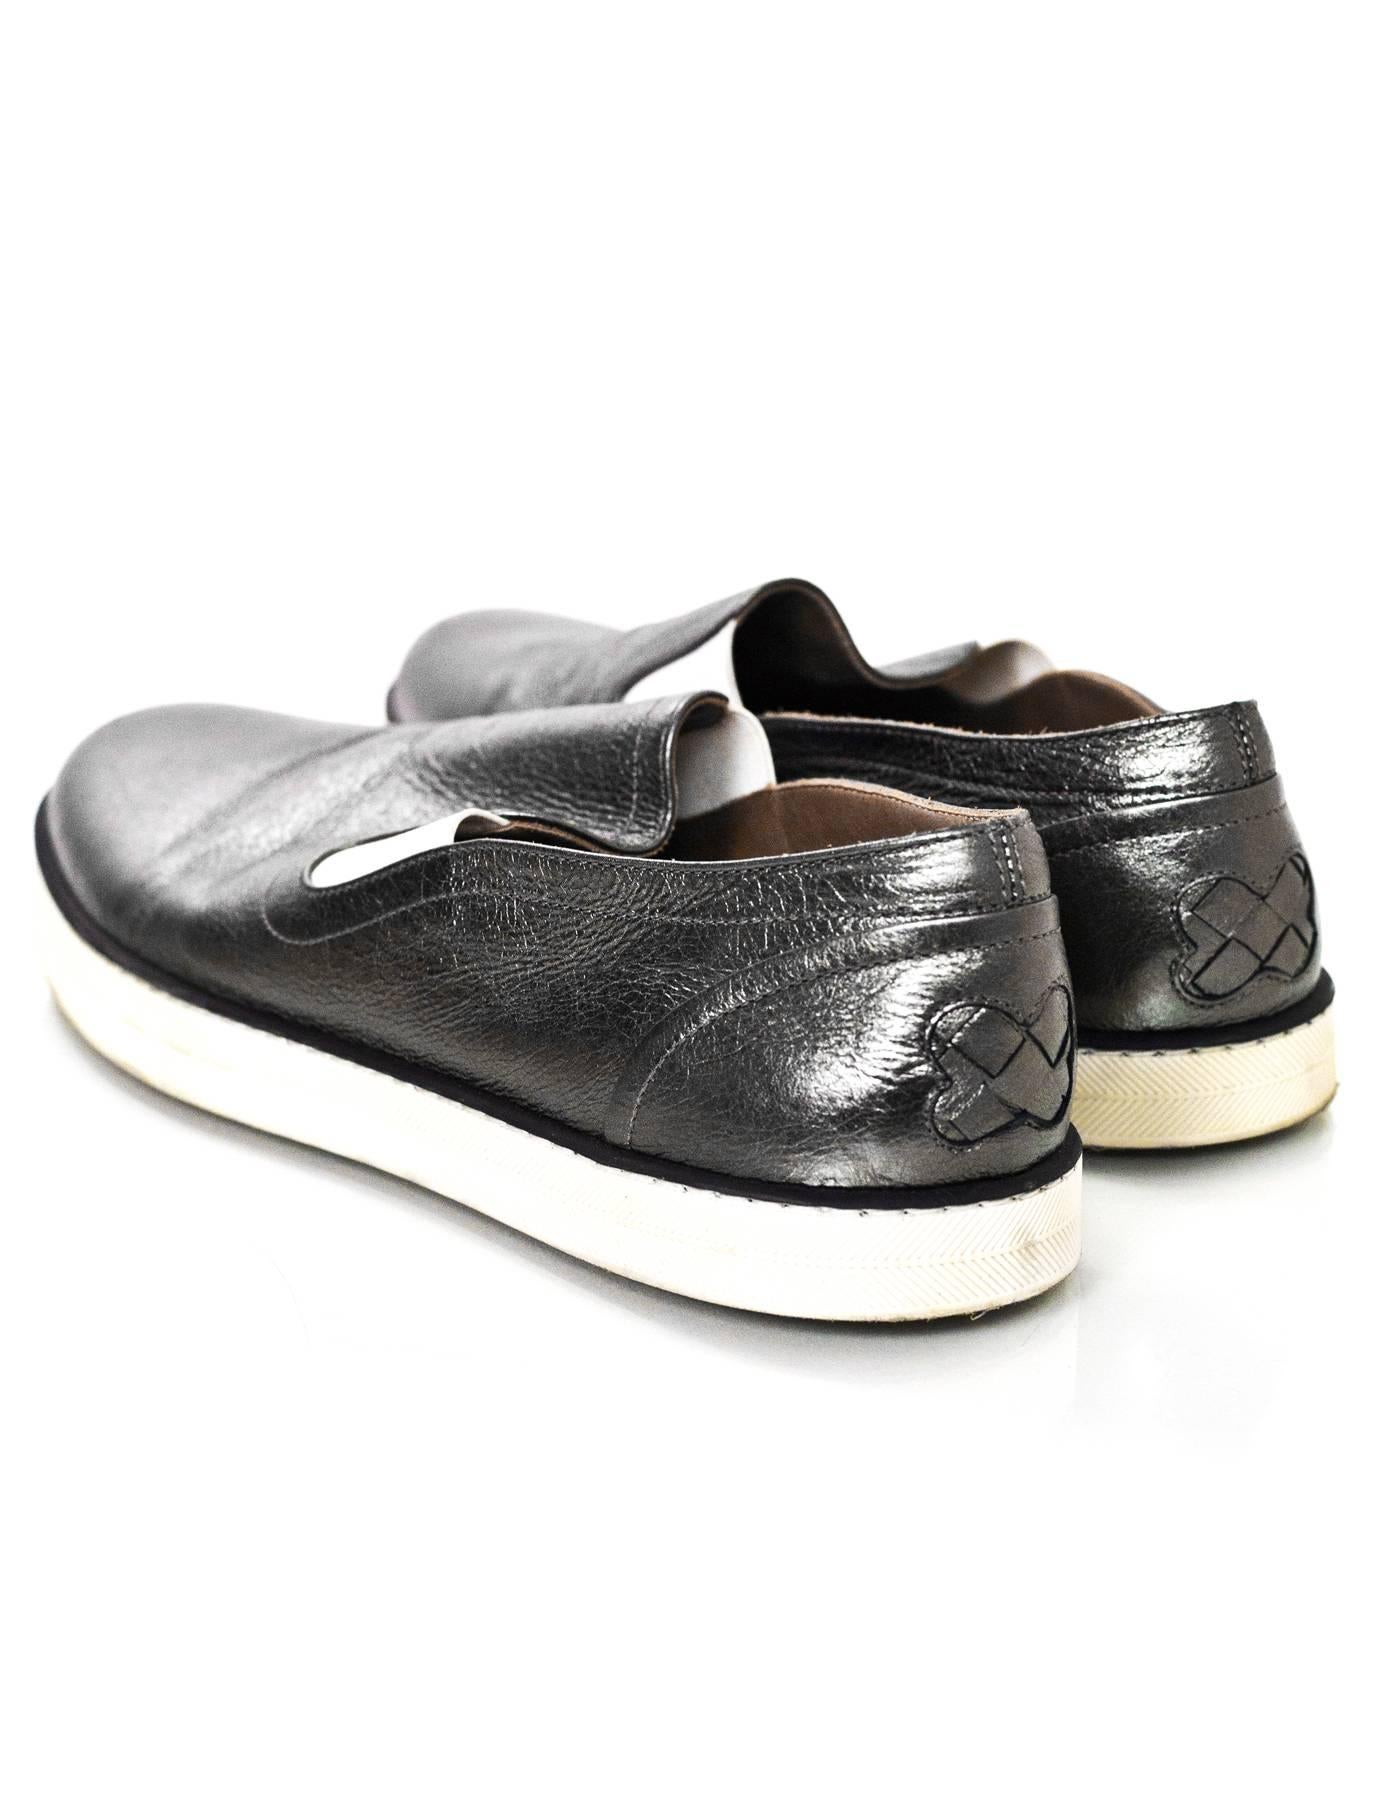 Bottega Veneta Silver Leather Sneakers Sz 41 1